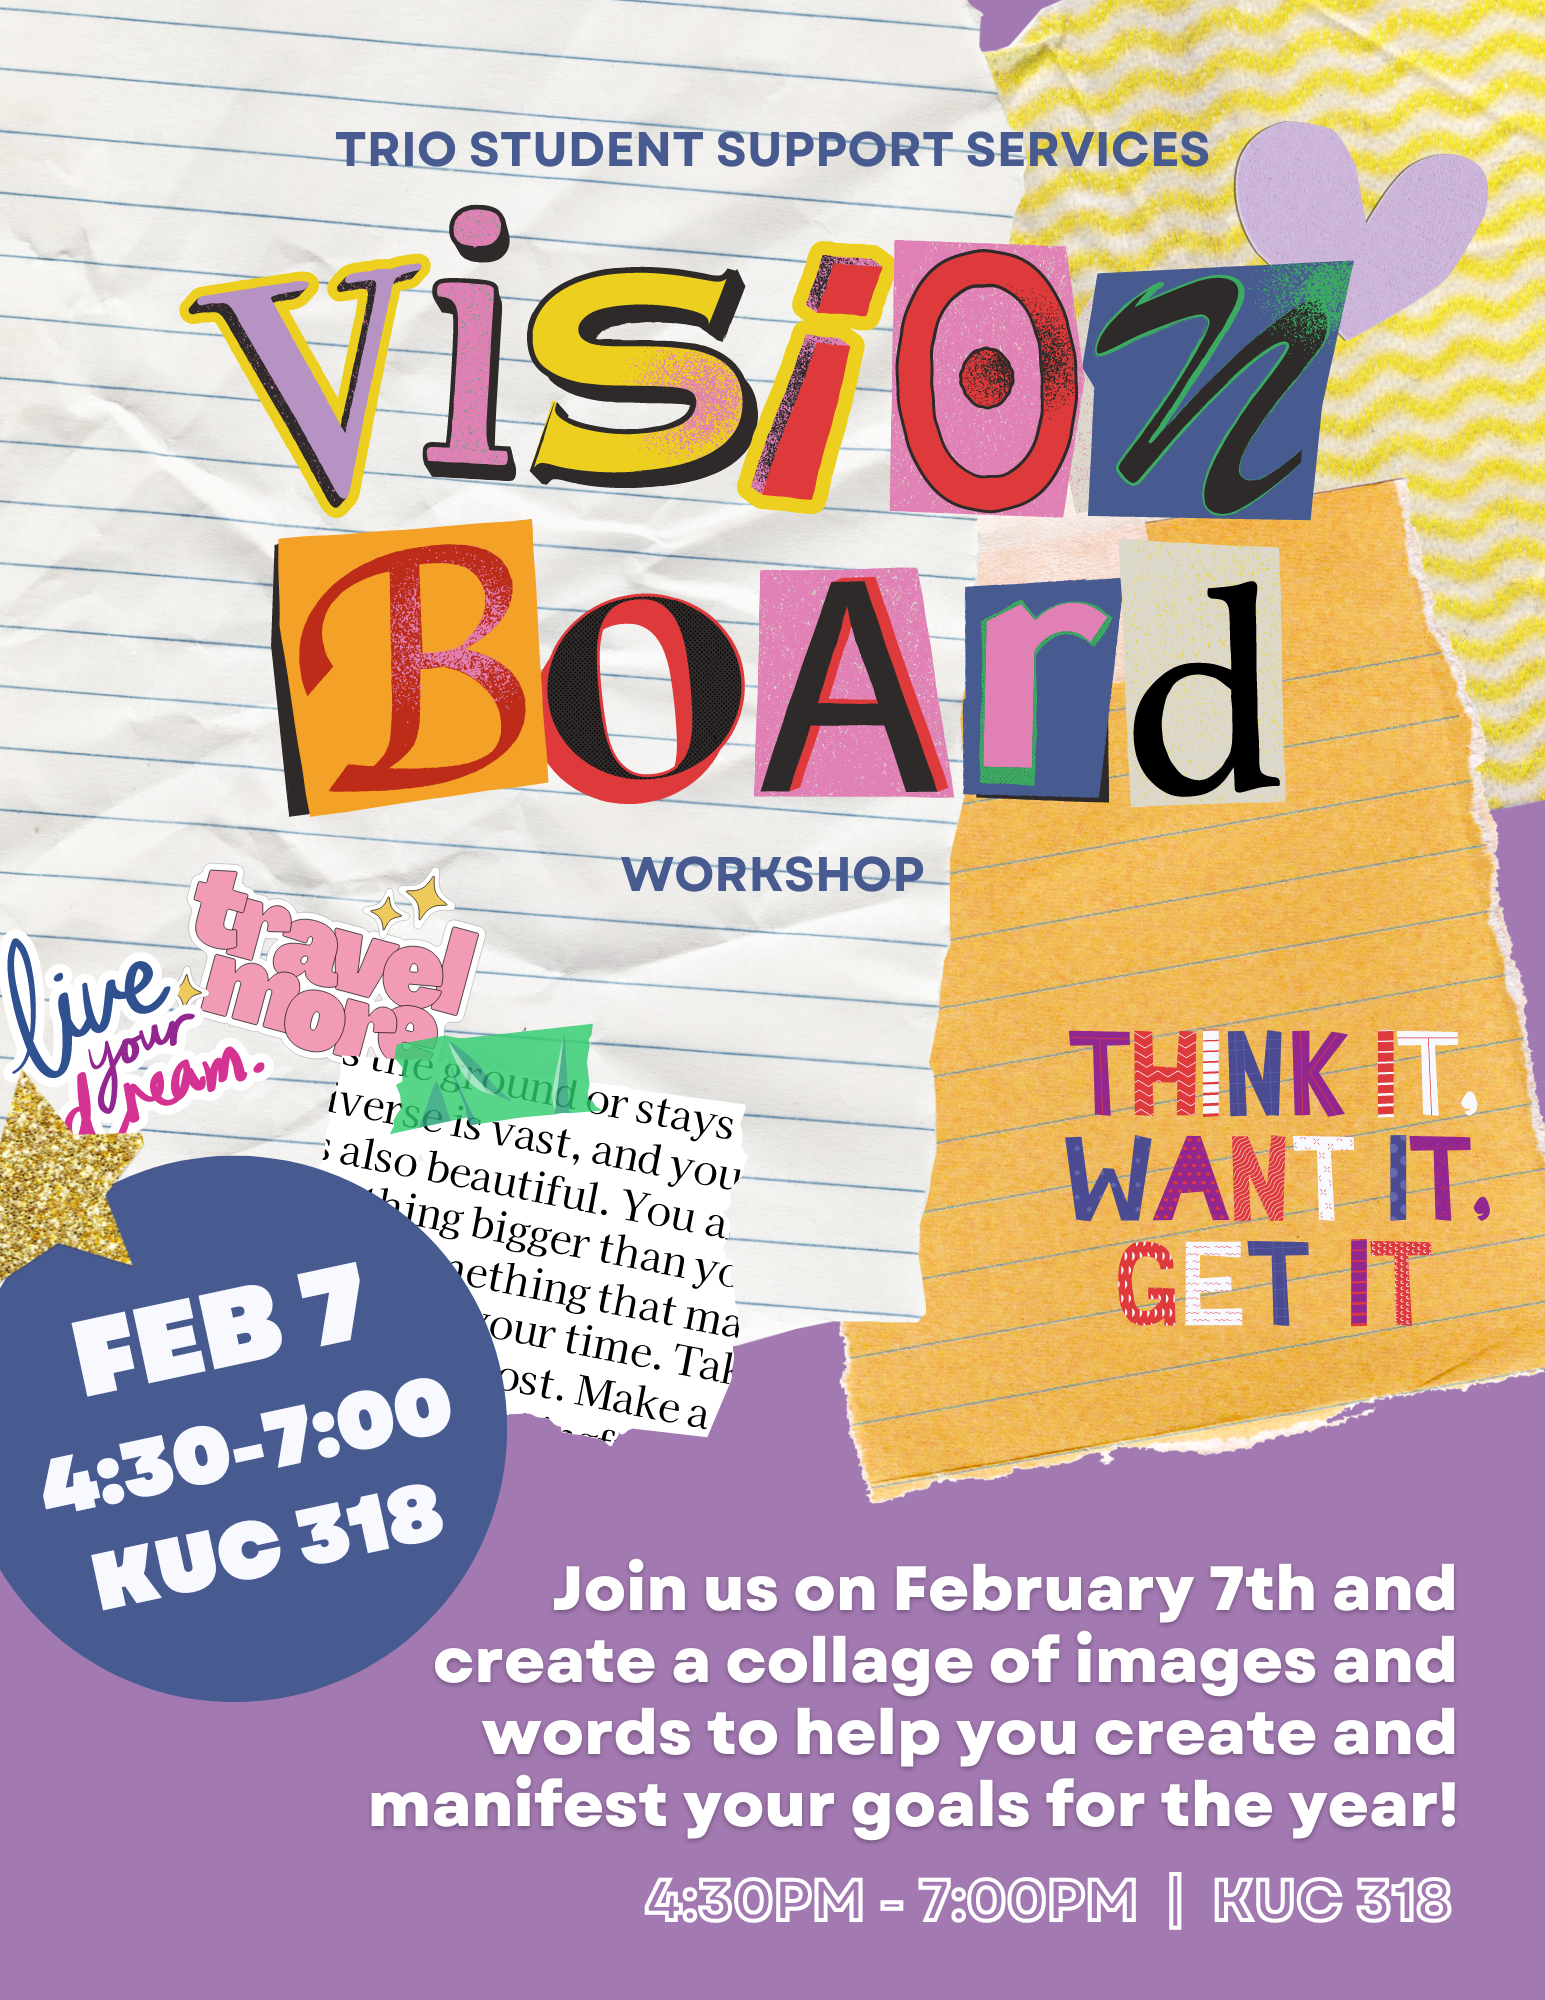 Vison Board Workshop - Feb. 7 at 4:30p in KUC 318